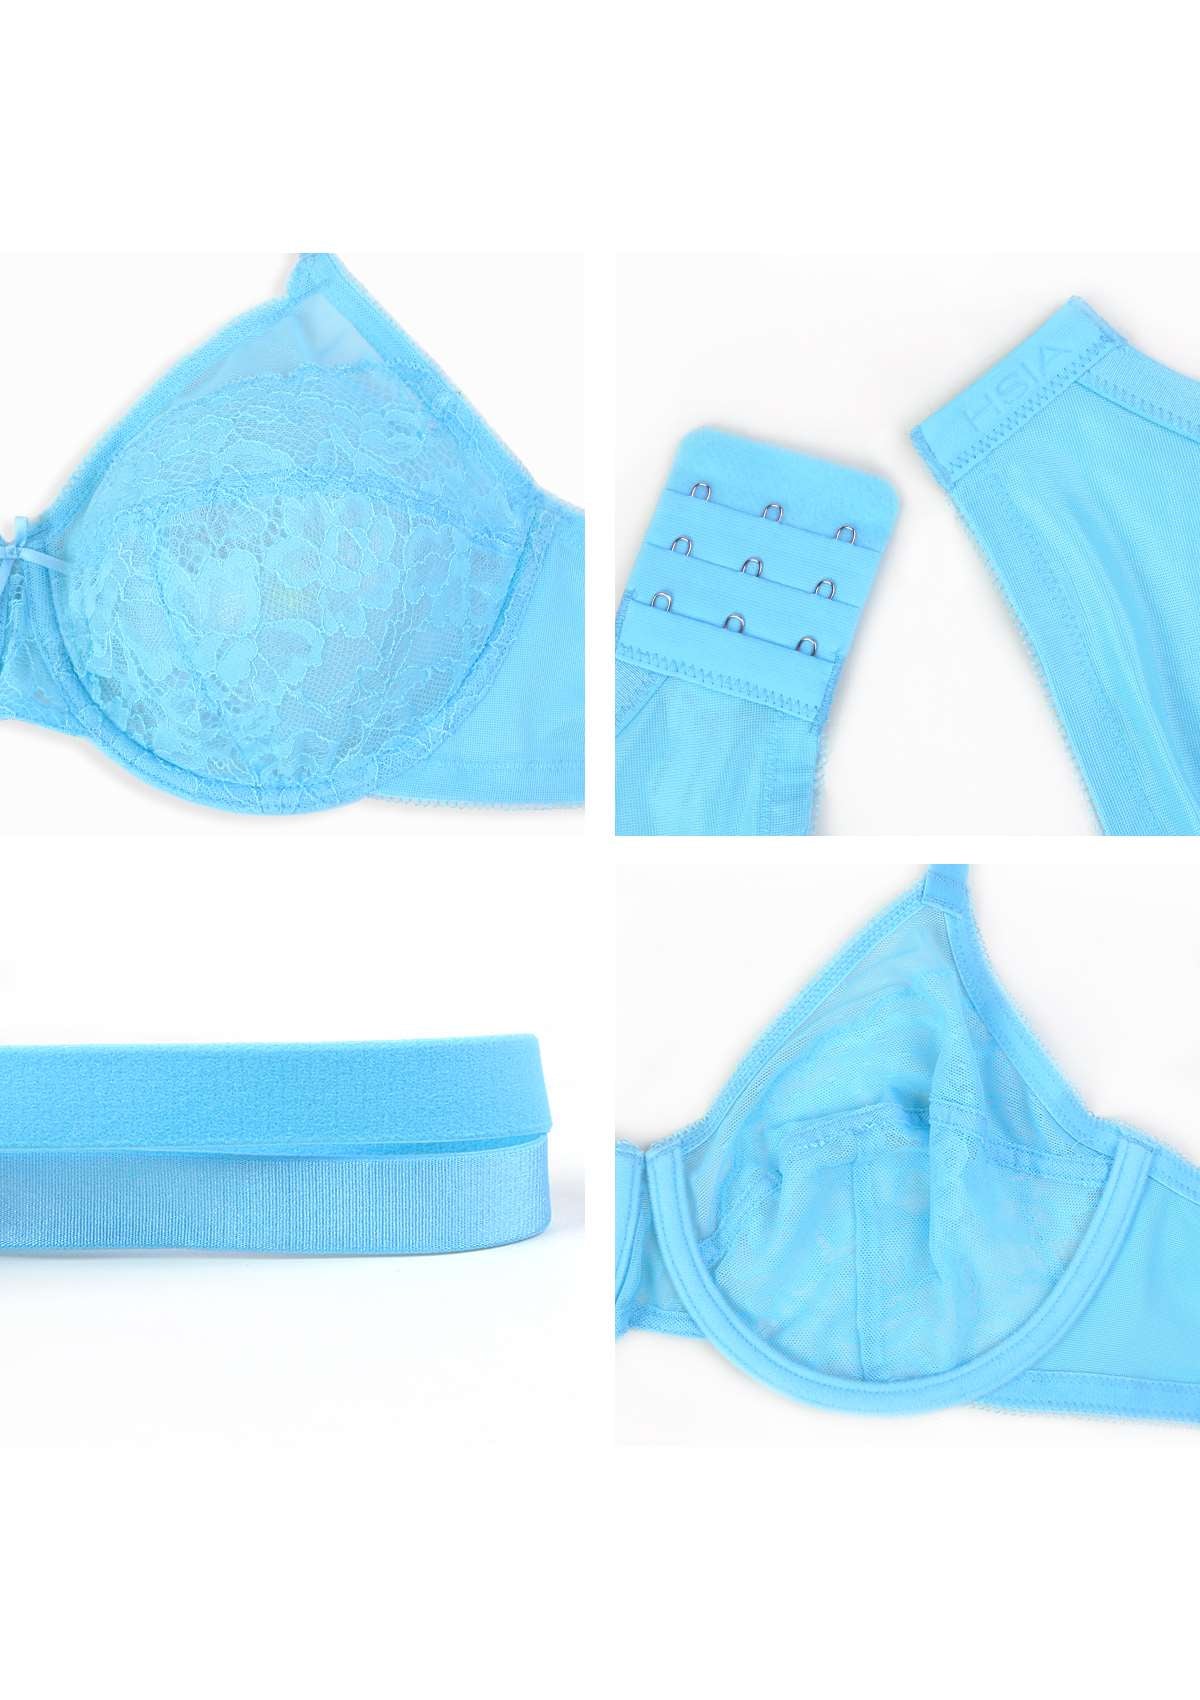 HSIA Enchante Minimizer Lace Bra: Full Support For Heavy Breasts - Capri Blue / 40 / G